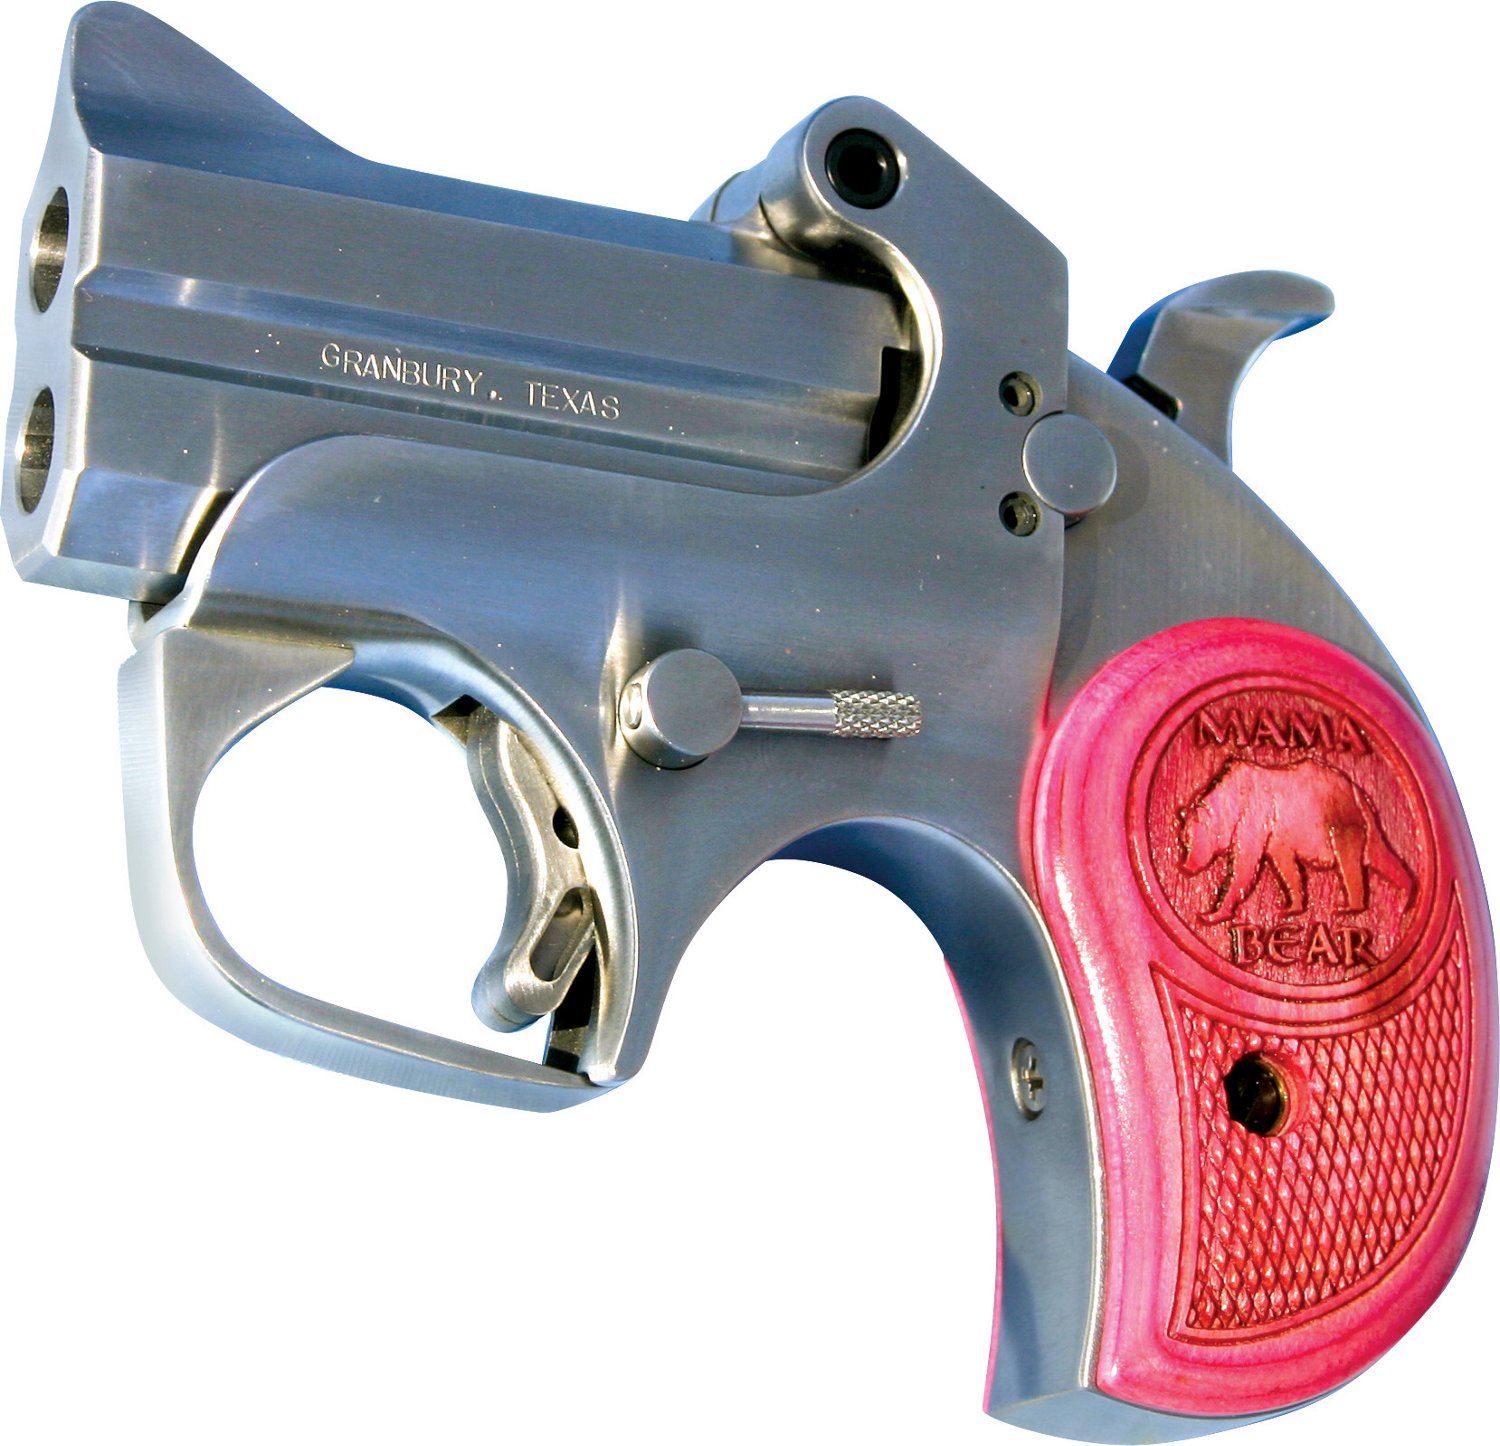 Bond Arms Mama Bear 357 Magnum38 Special Derringer Pistol Academy